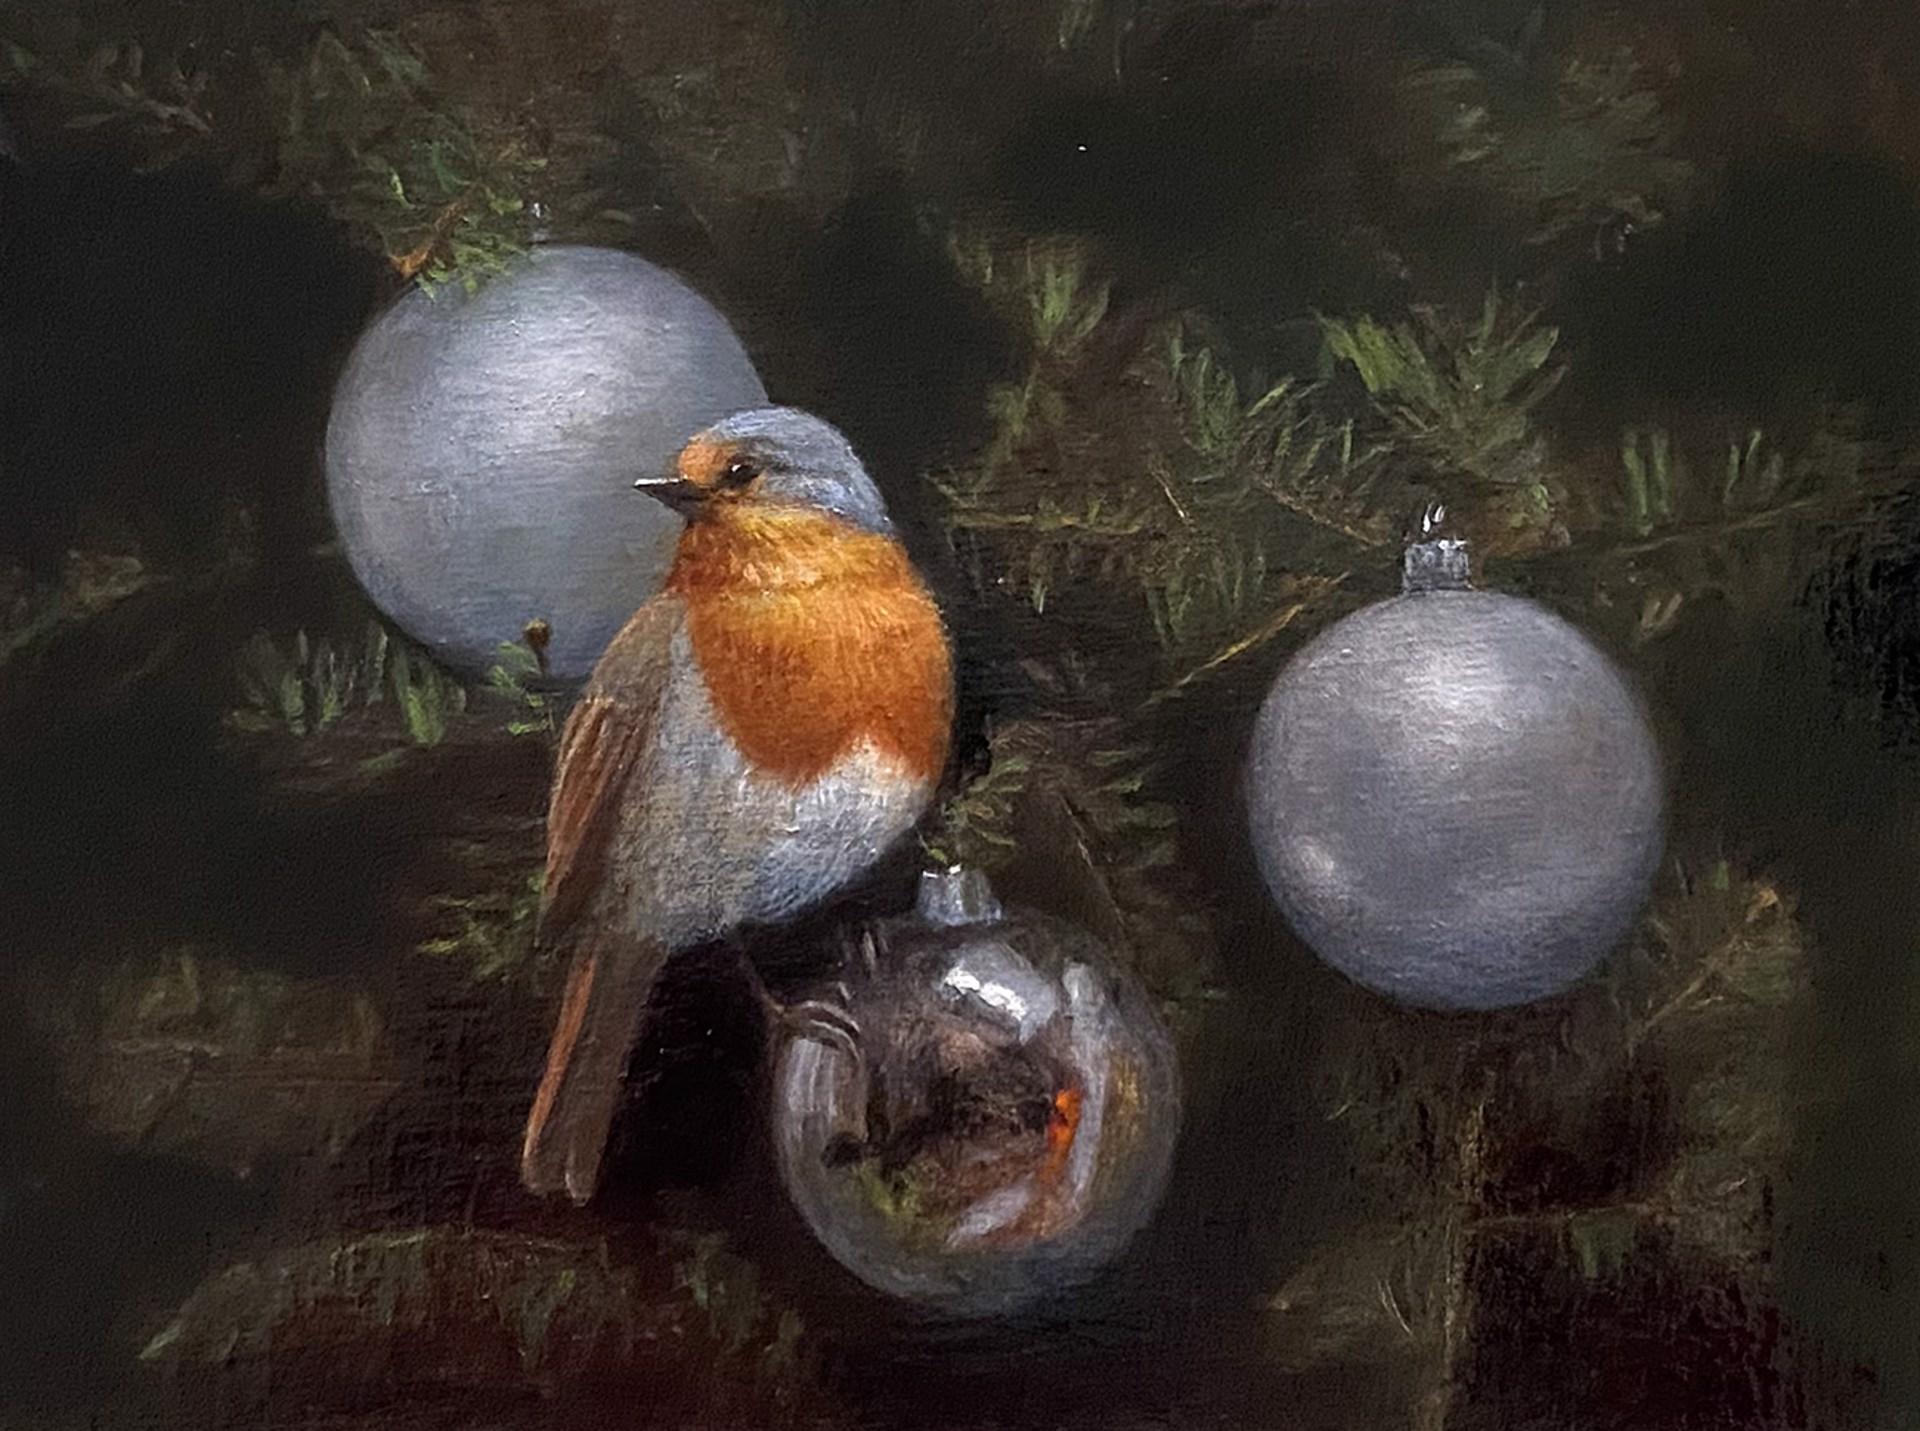 Robin in Christmas Tree by Patt Baldino